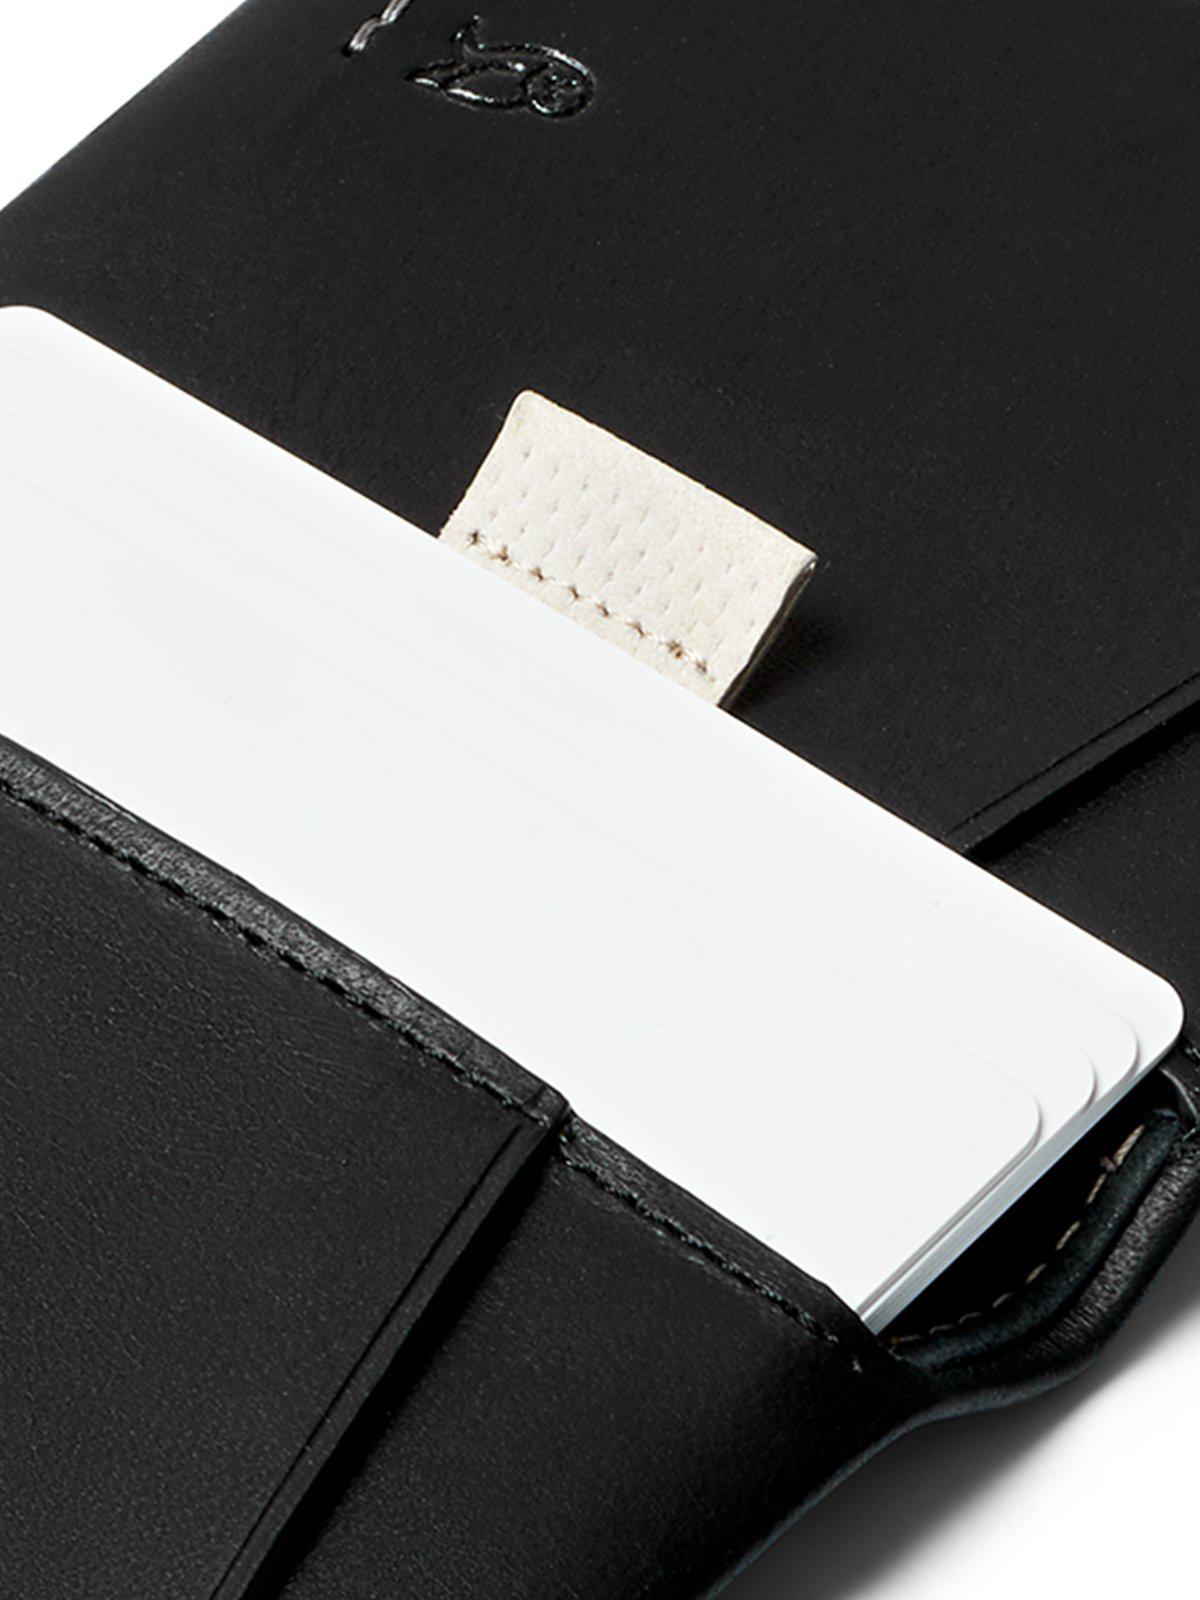 Bellroy Slim Sleeve Wallet Premium Edition Black RFID